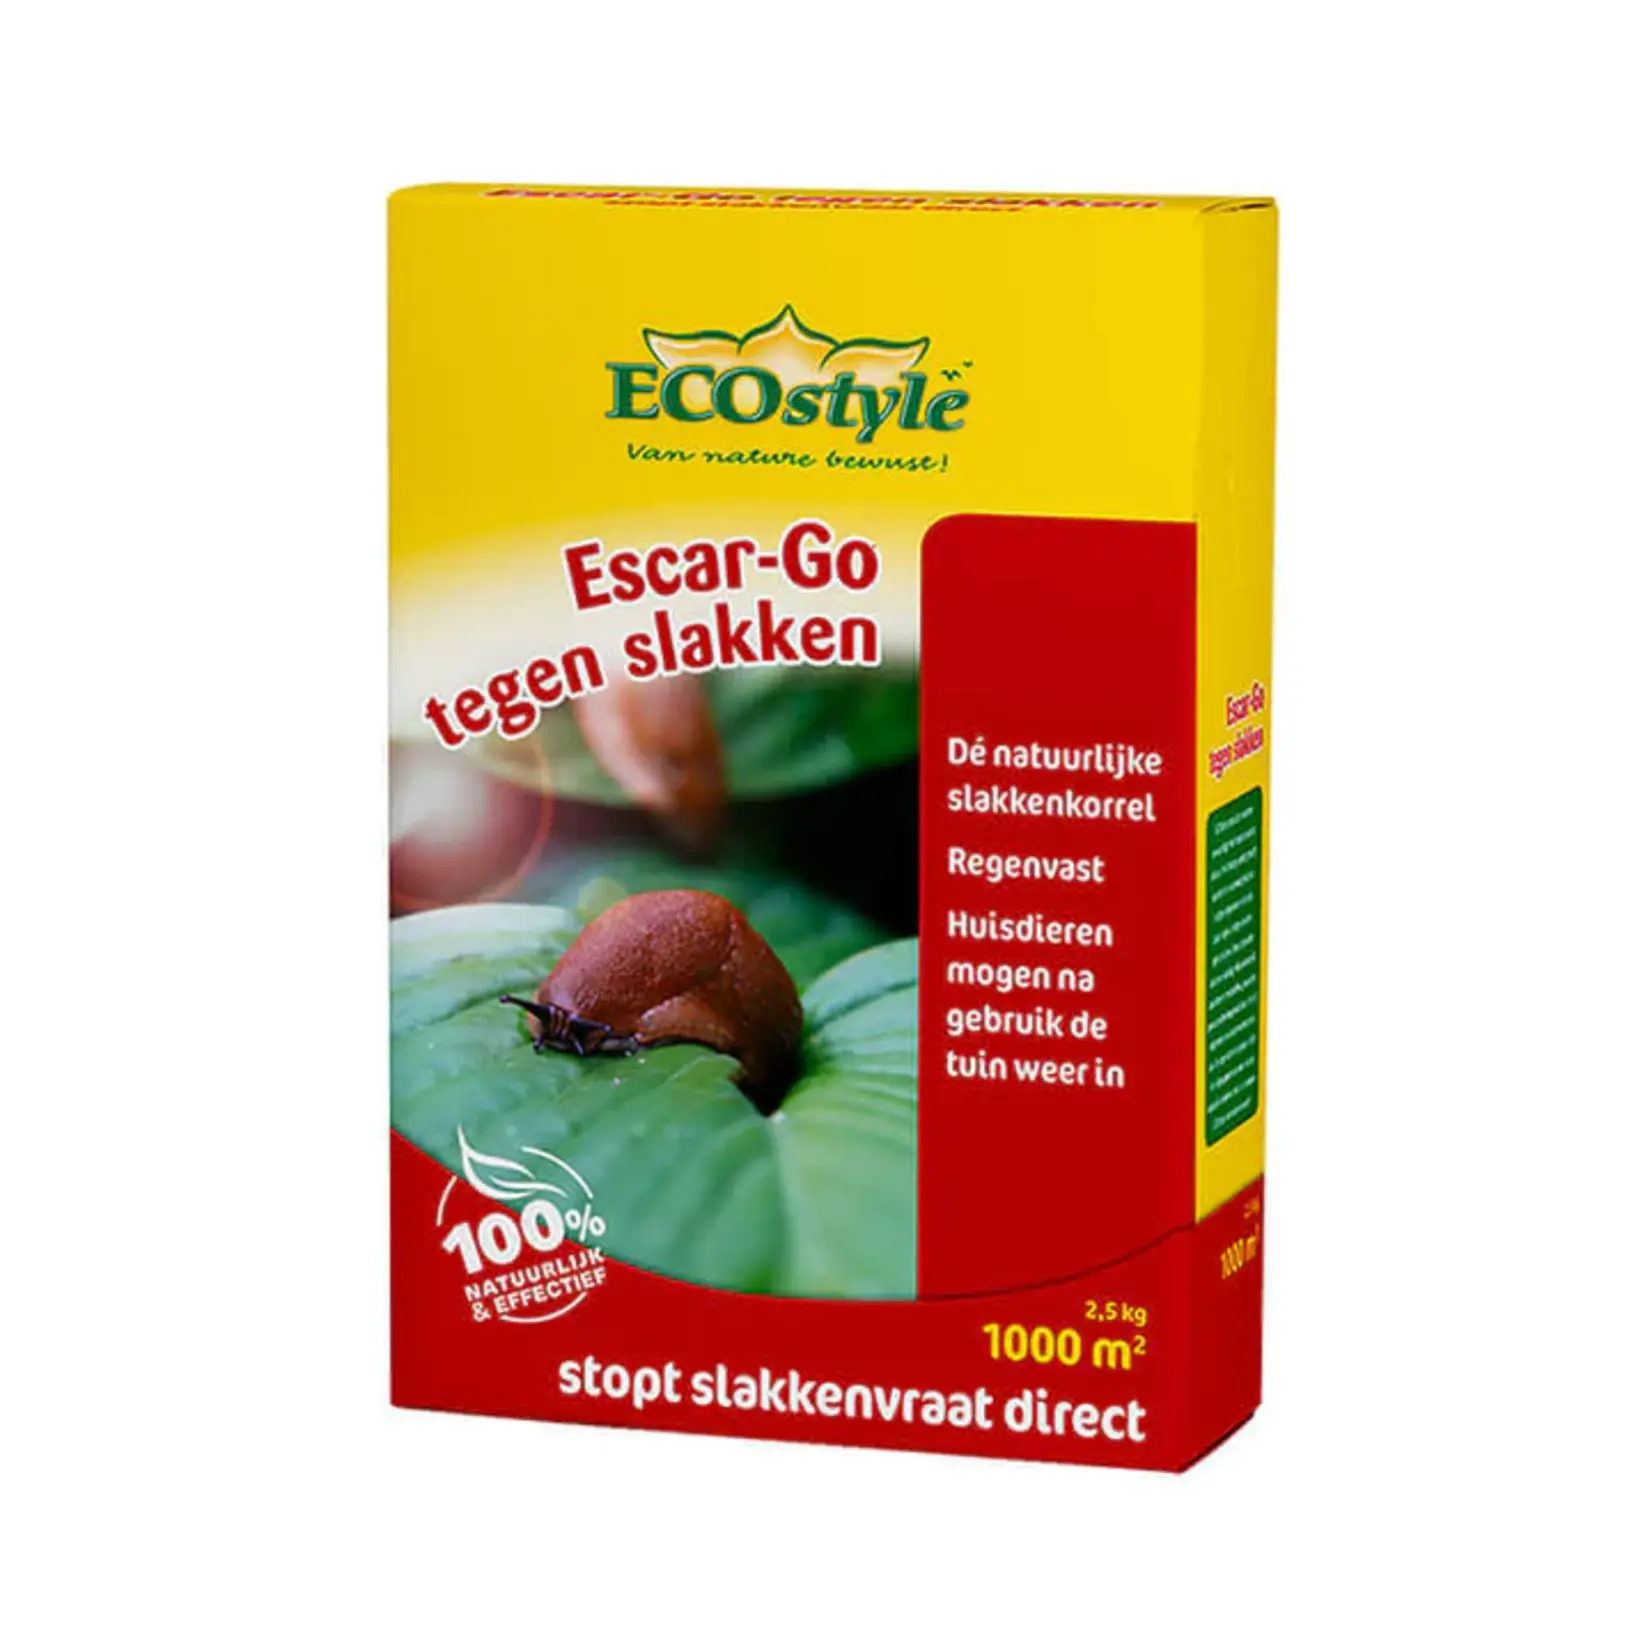 ECOstyle Escar-Go 2.5 kg  tegen slakken (1000 m2)